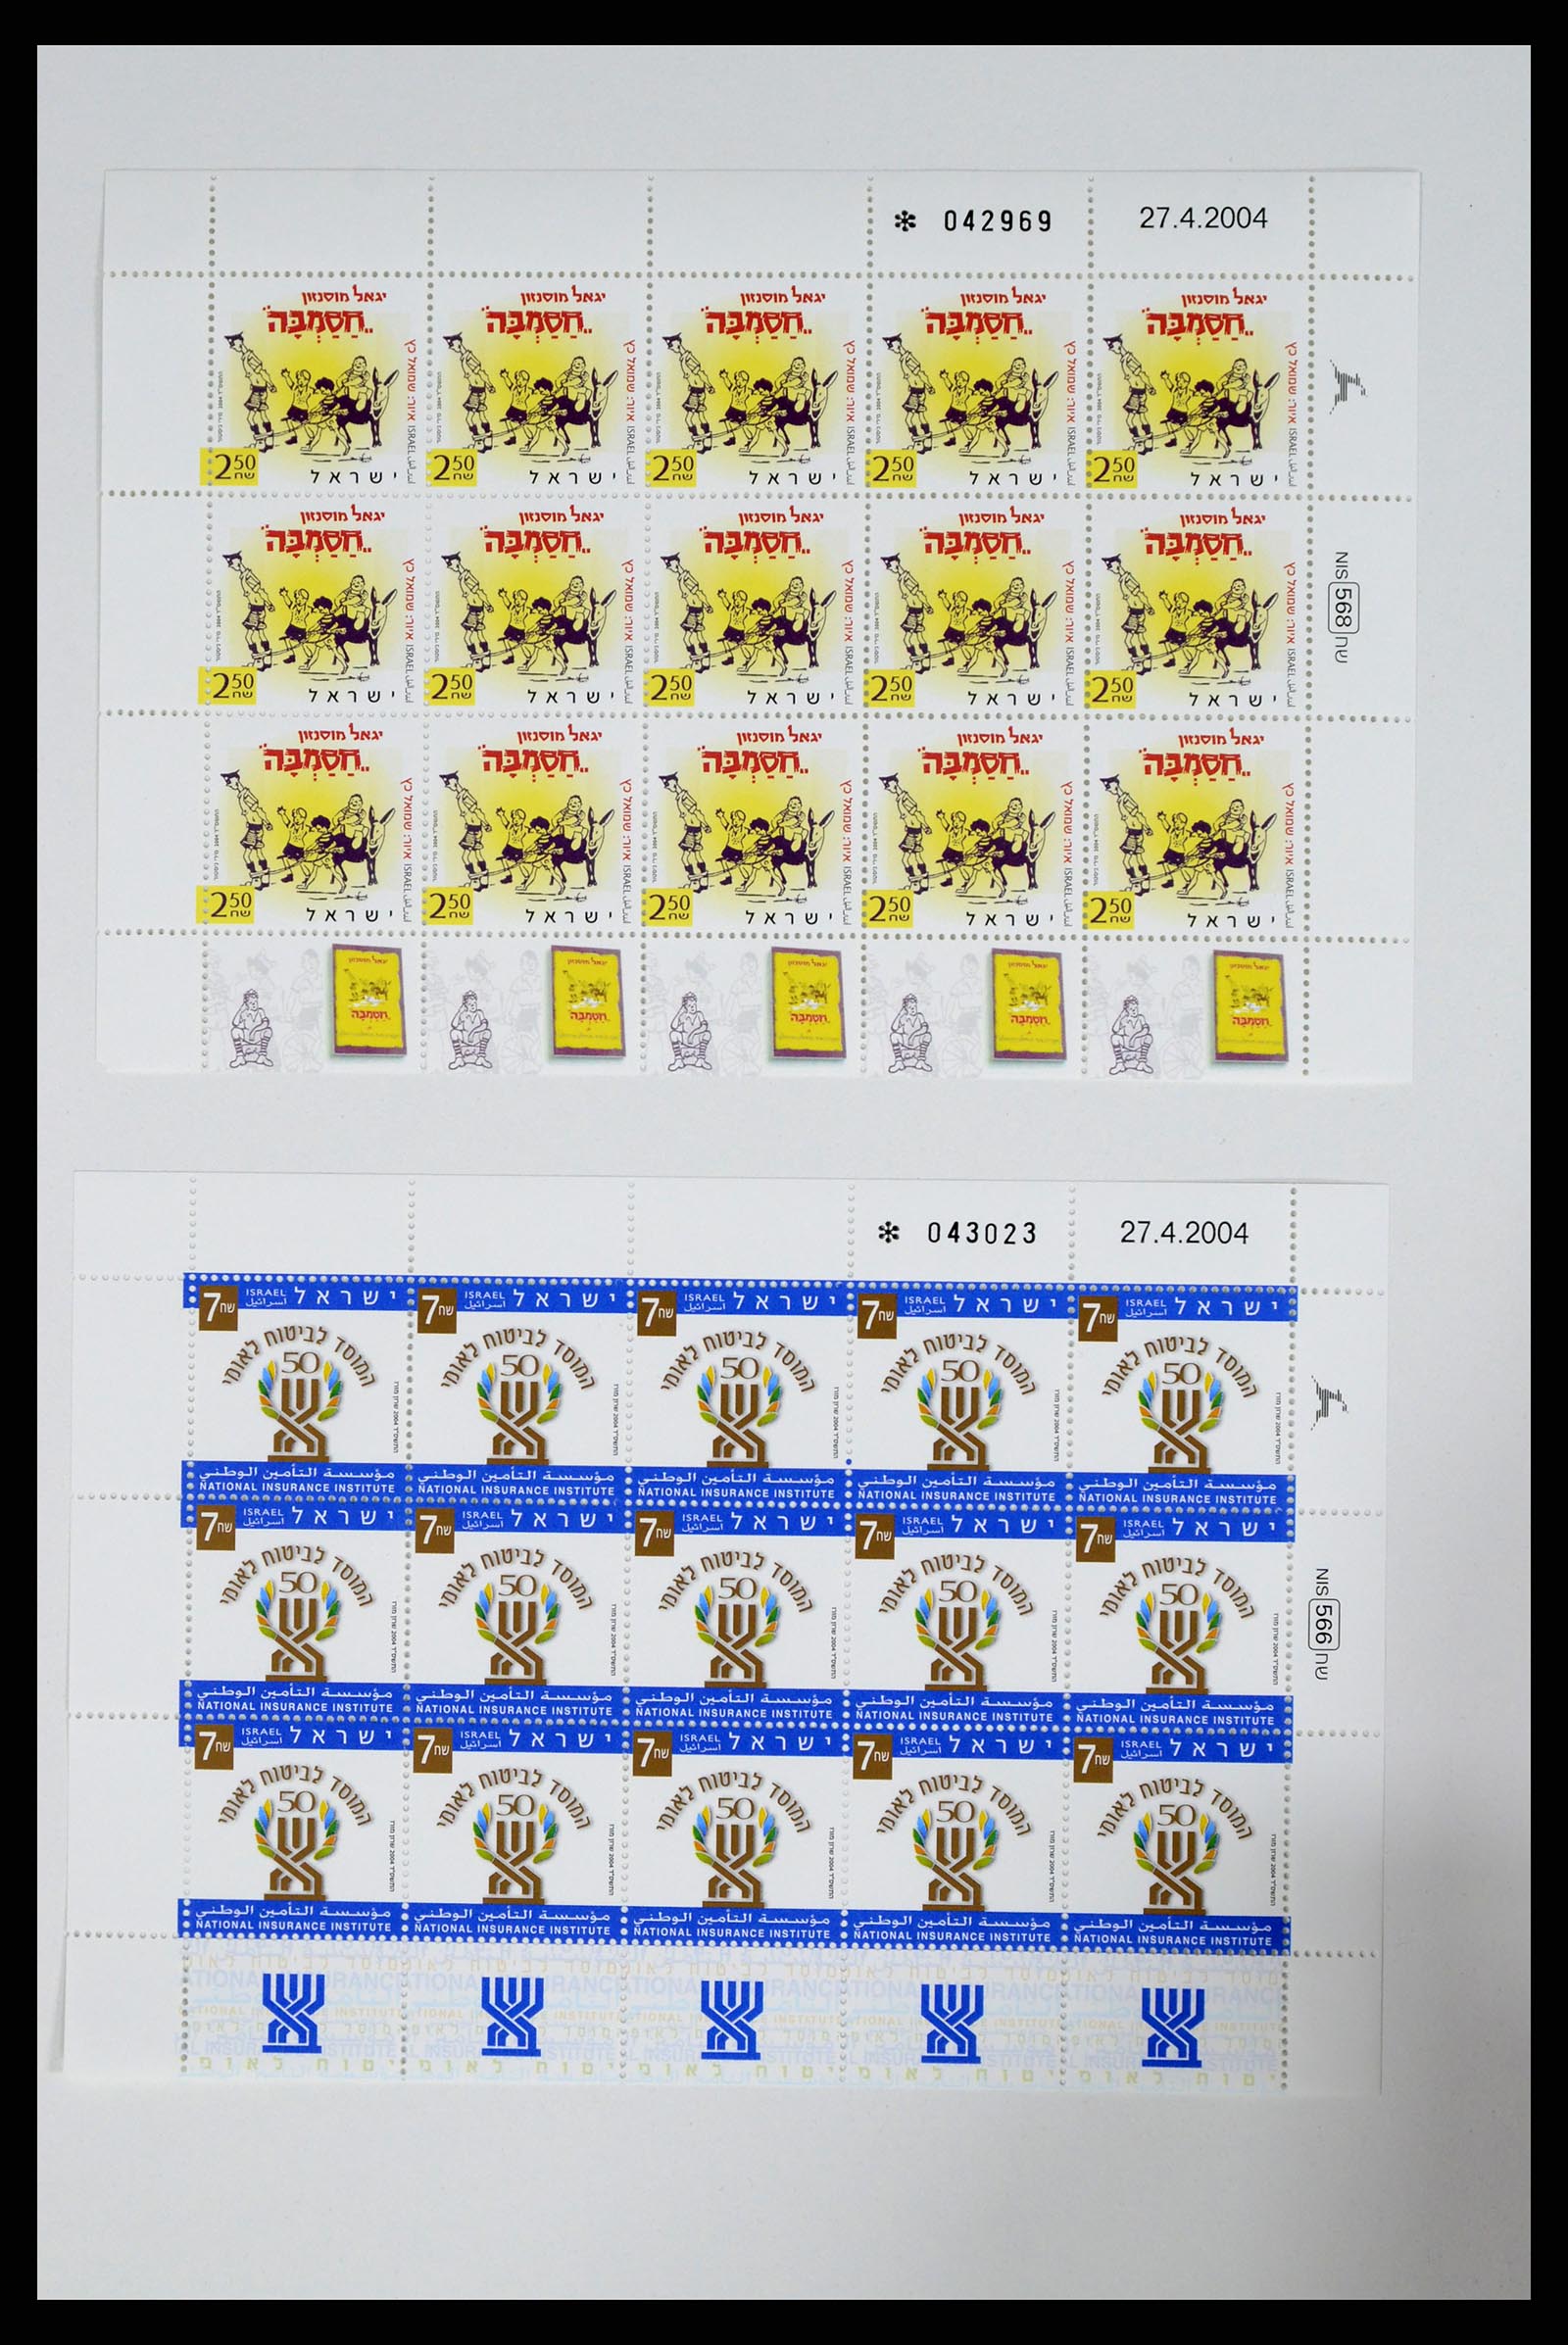 37779 337 - Stamp collection 37779 Israel sheetlets 1986-2009.